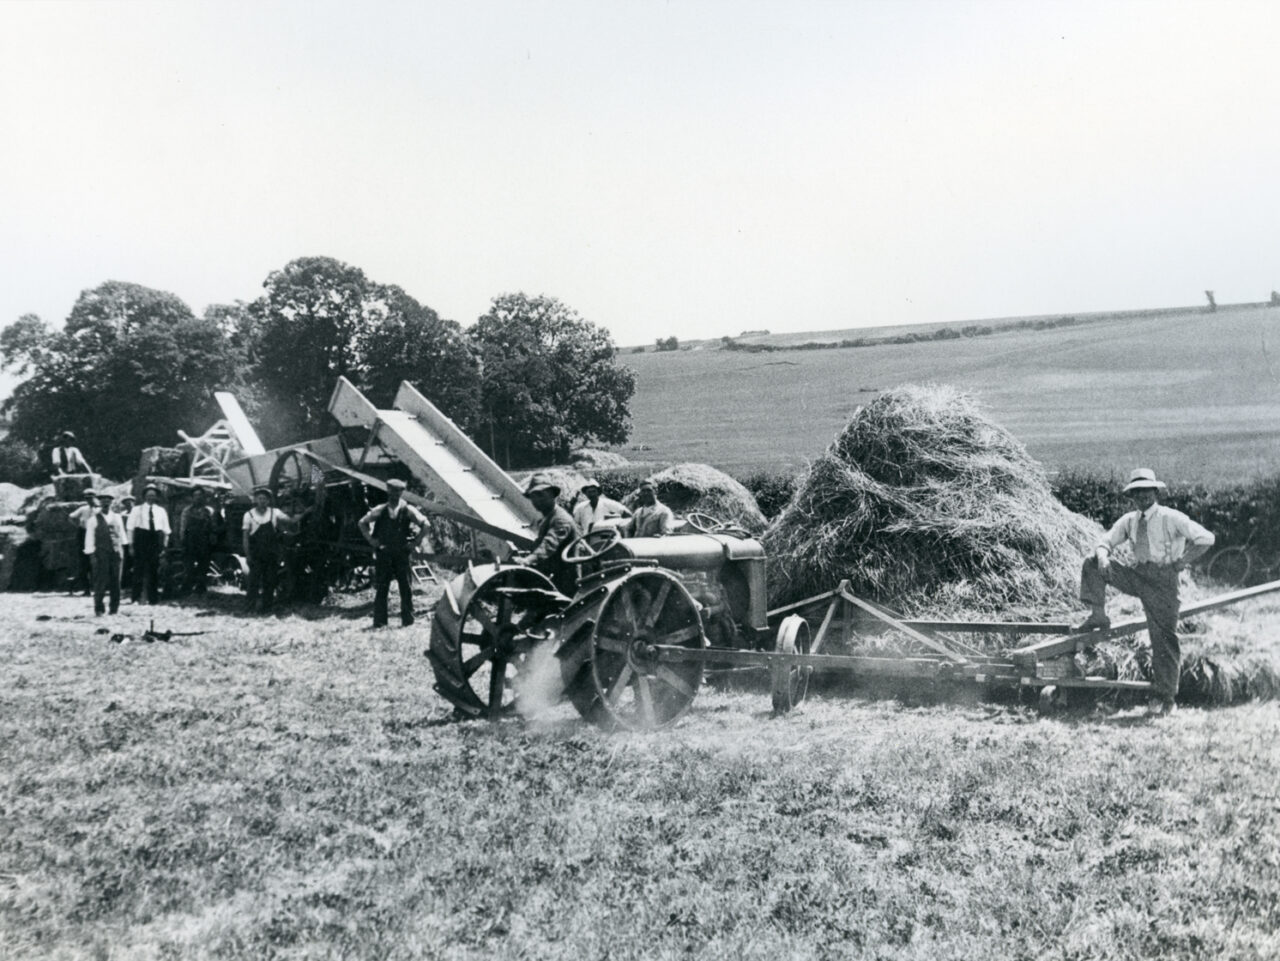 014_Demonstration of Debenham’s patented hay sweep & tractor driven baler